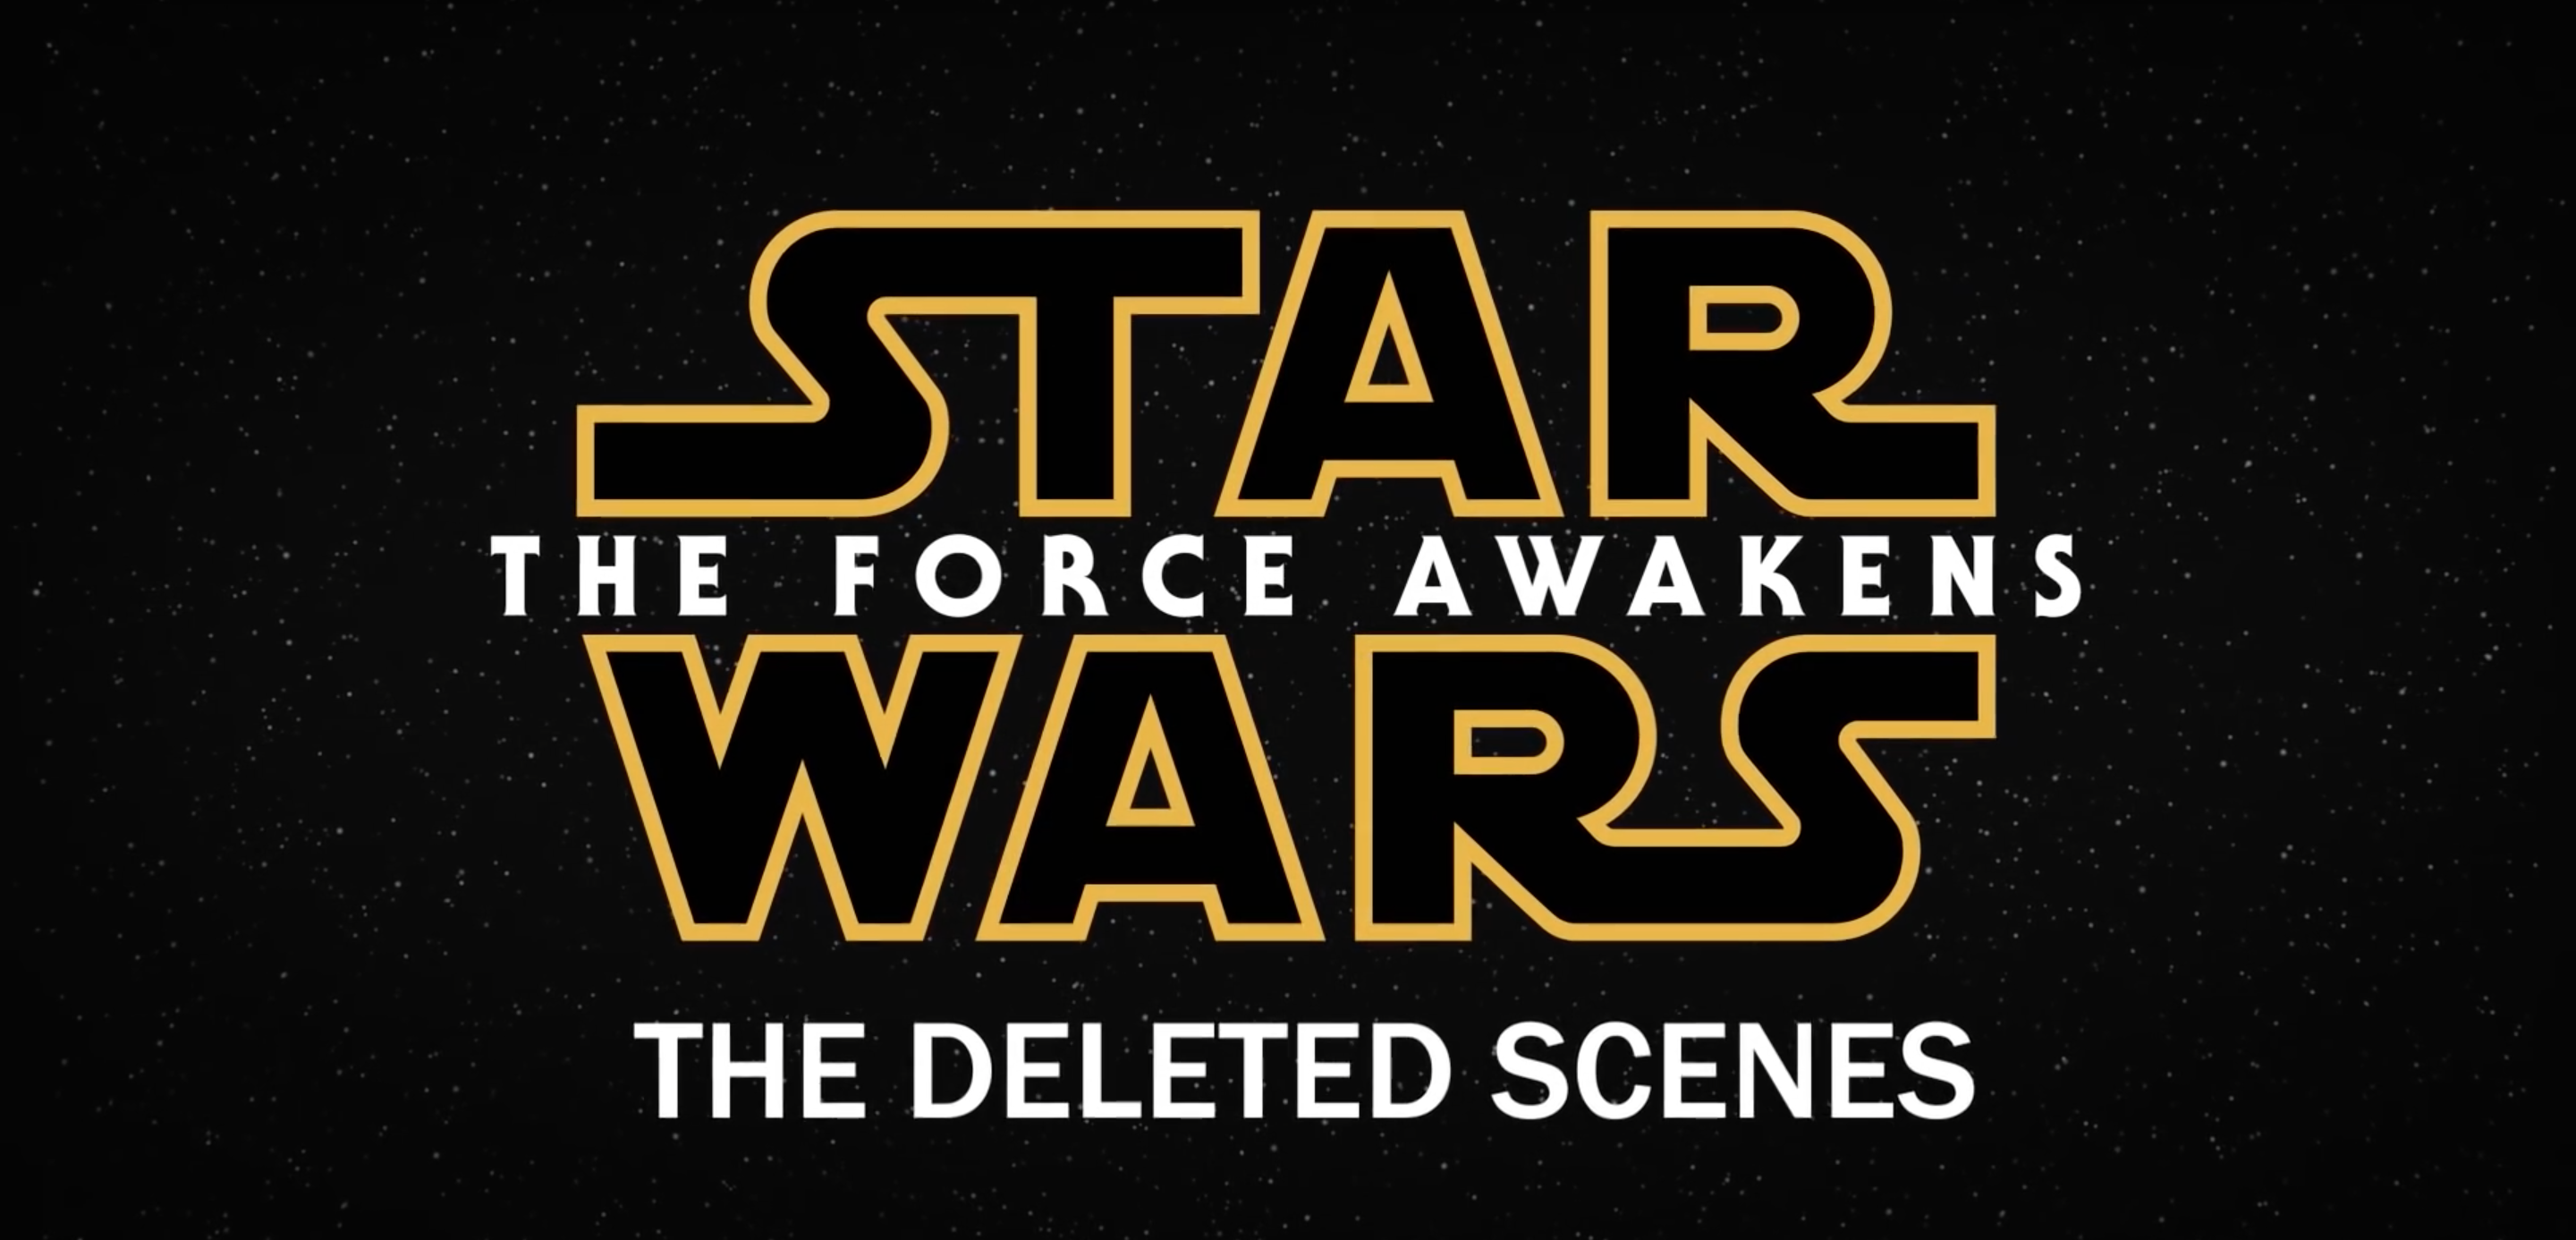 Star Wars Force Awakens Deleted Scenes